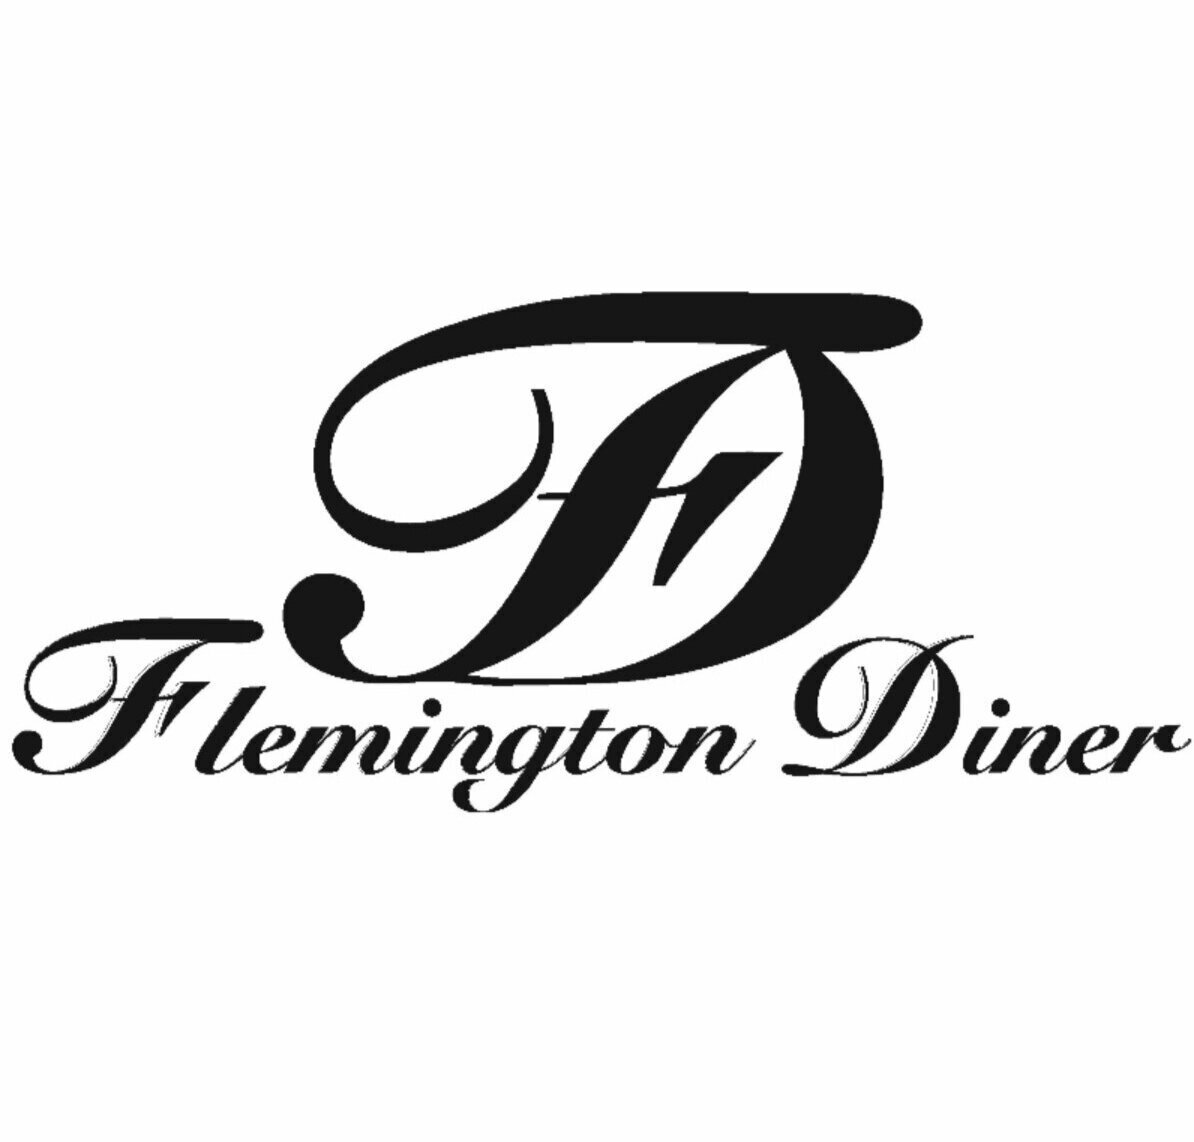 Flemington Diner